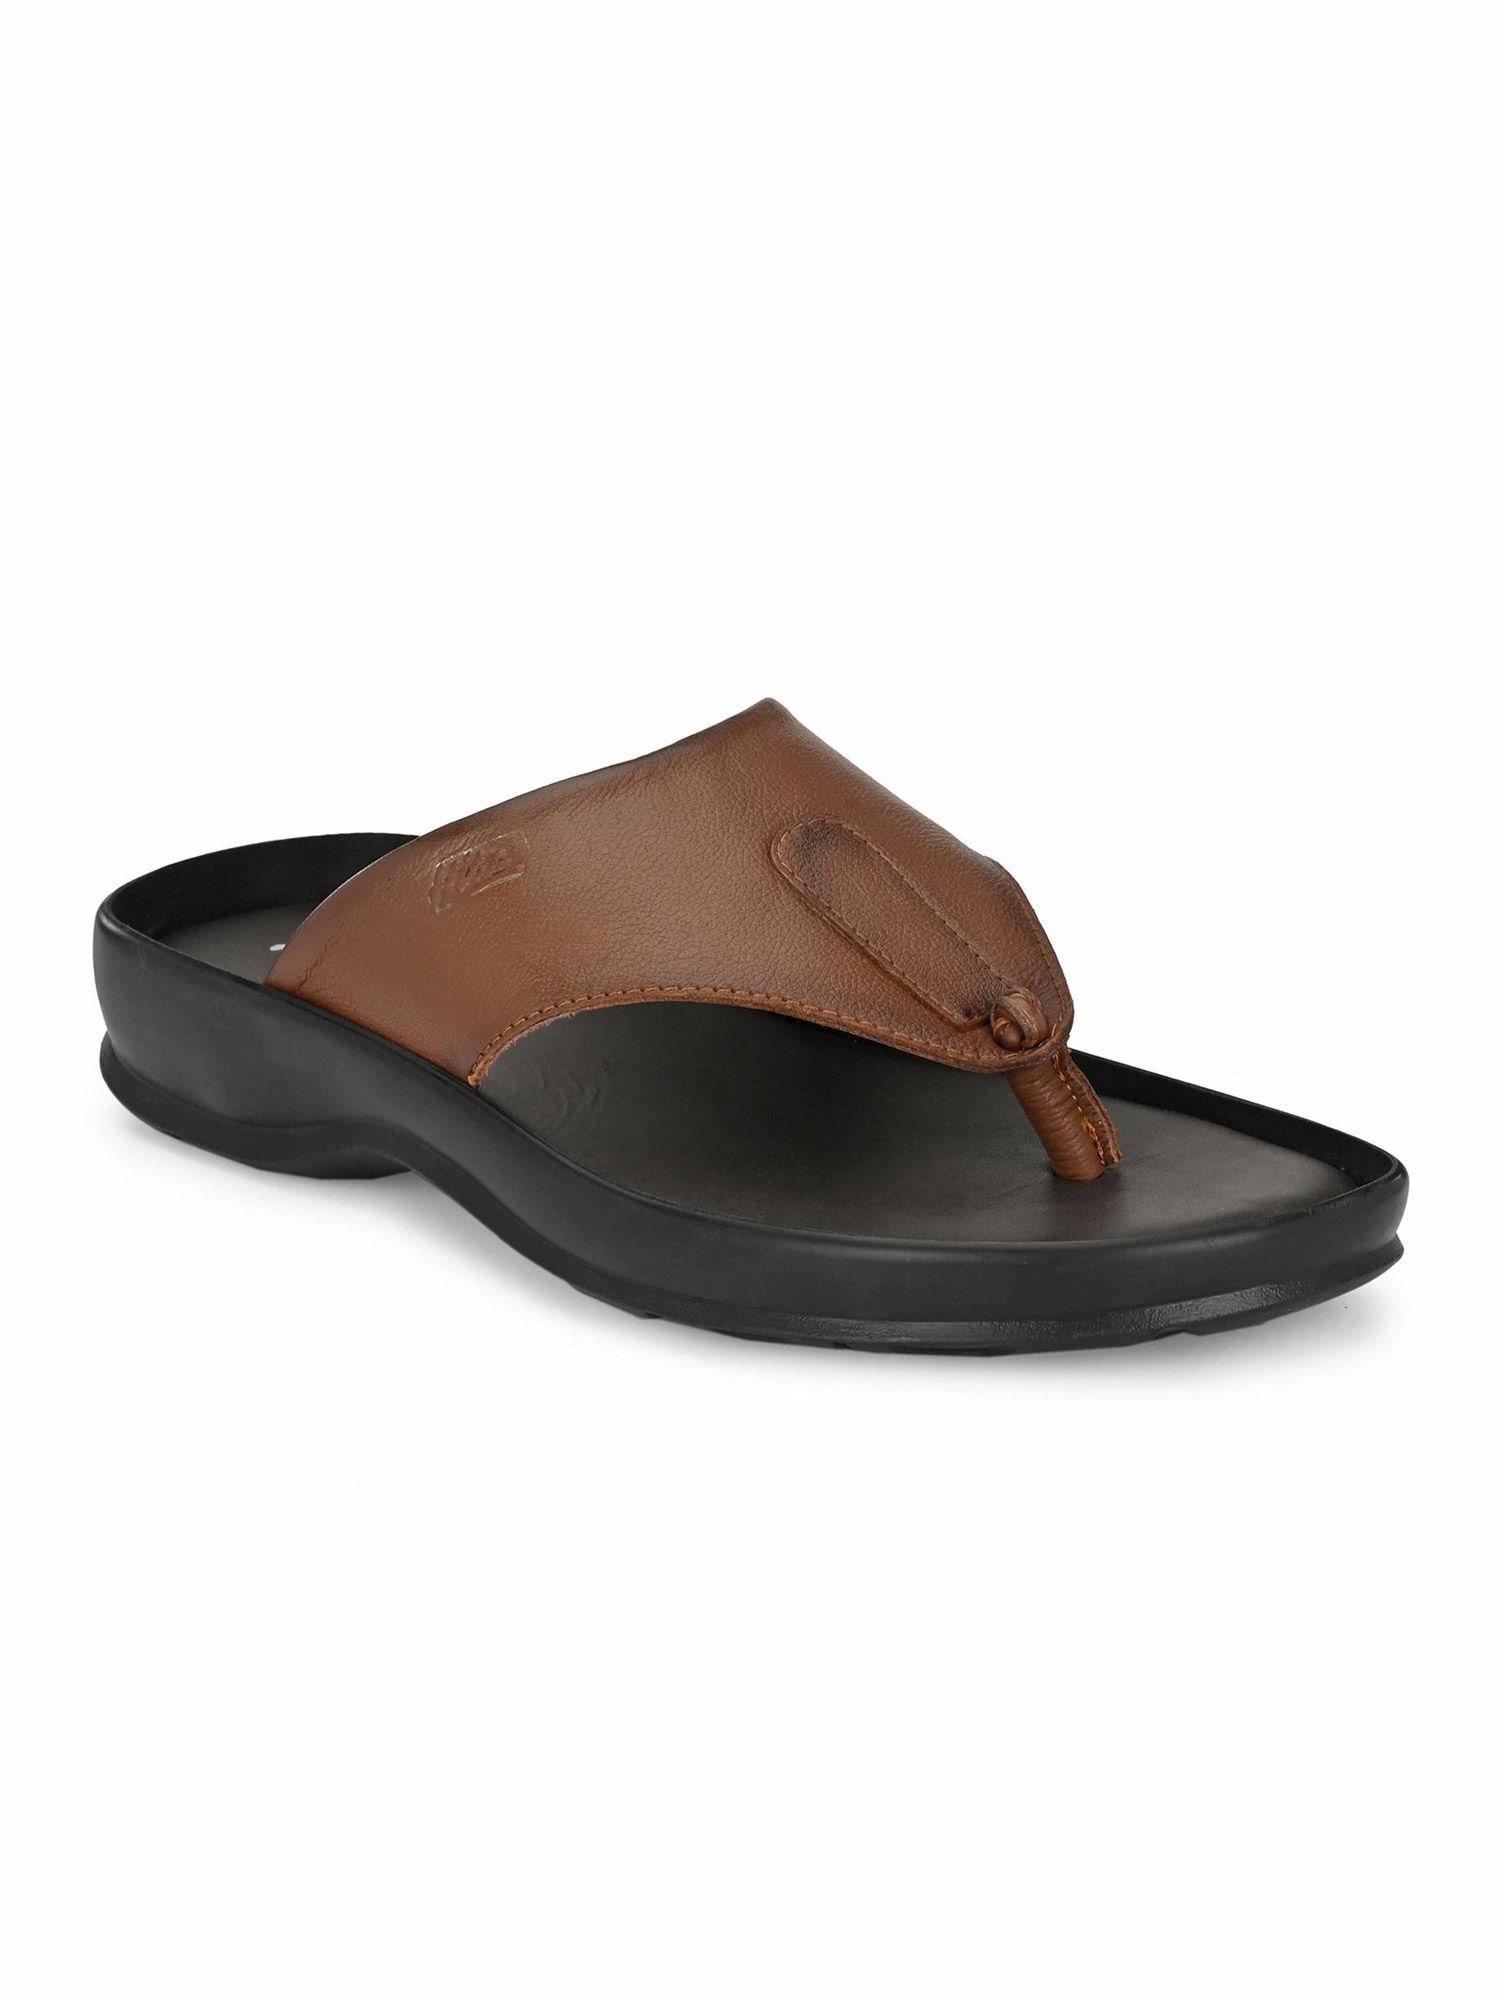 tan-leather-sandal